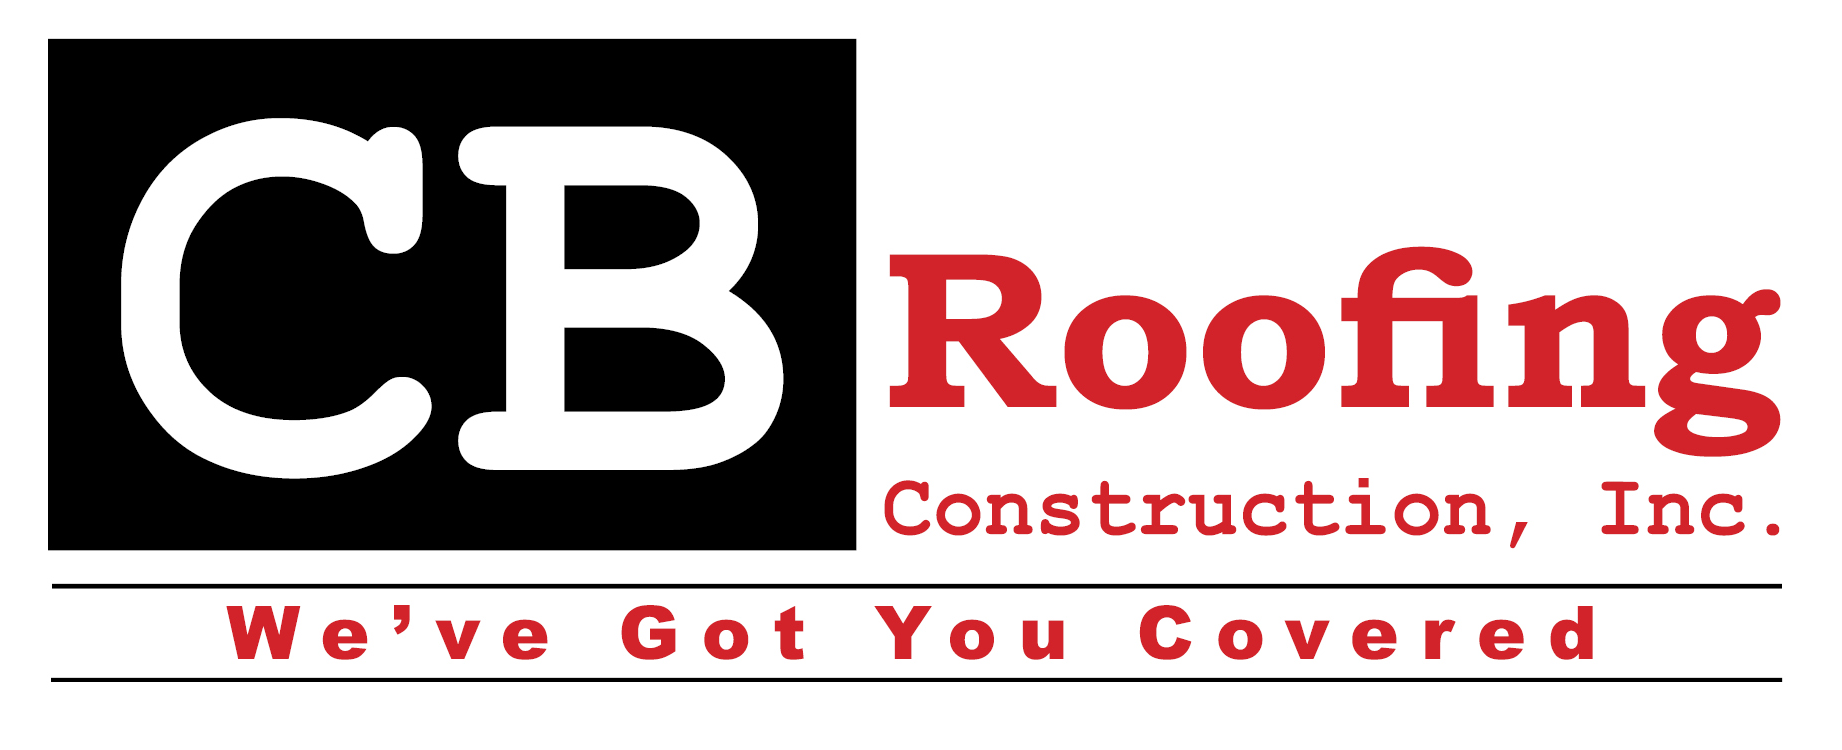 CB Roofing Construction, Inc. Logo